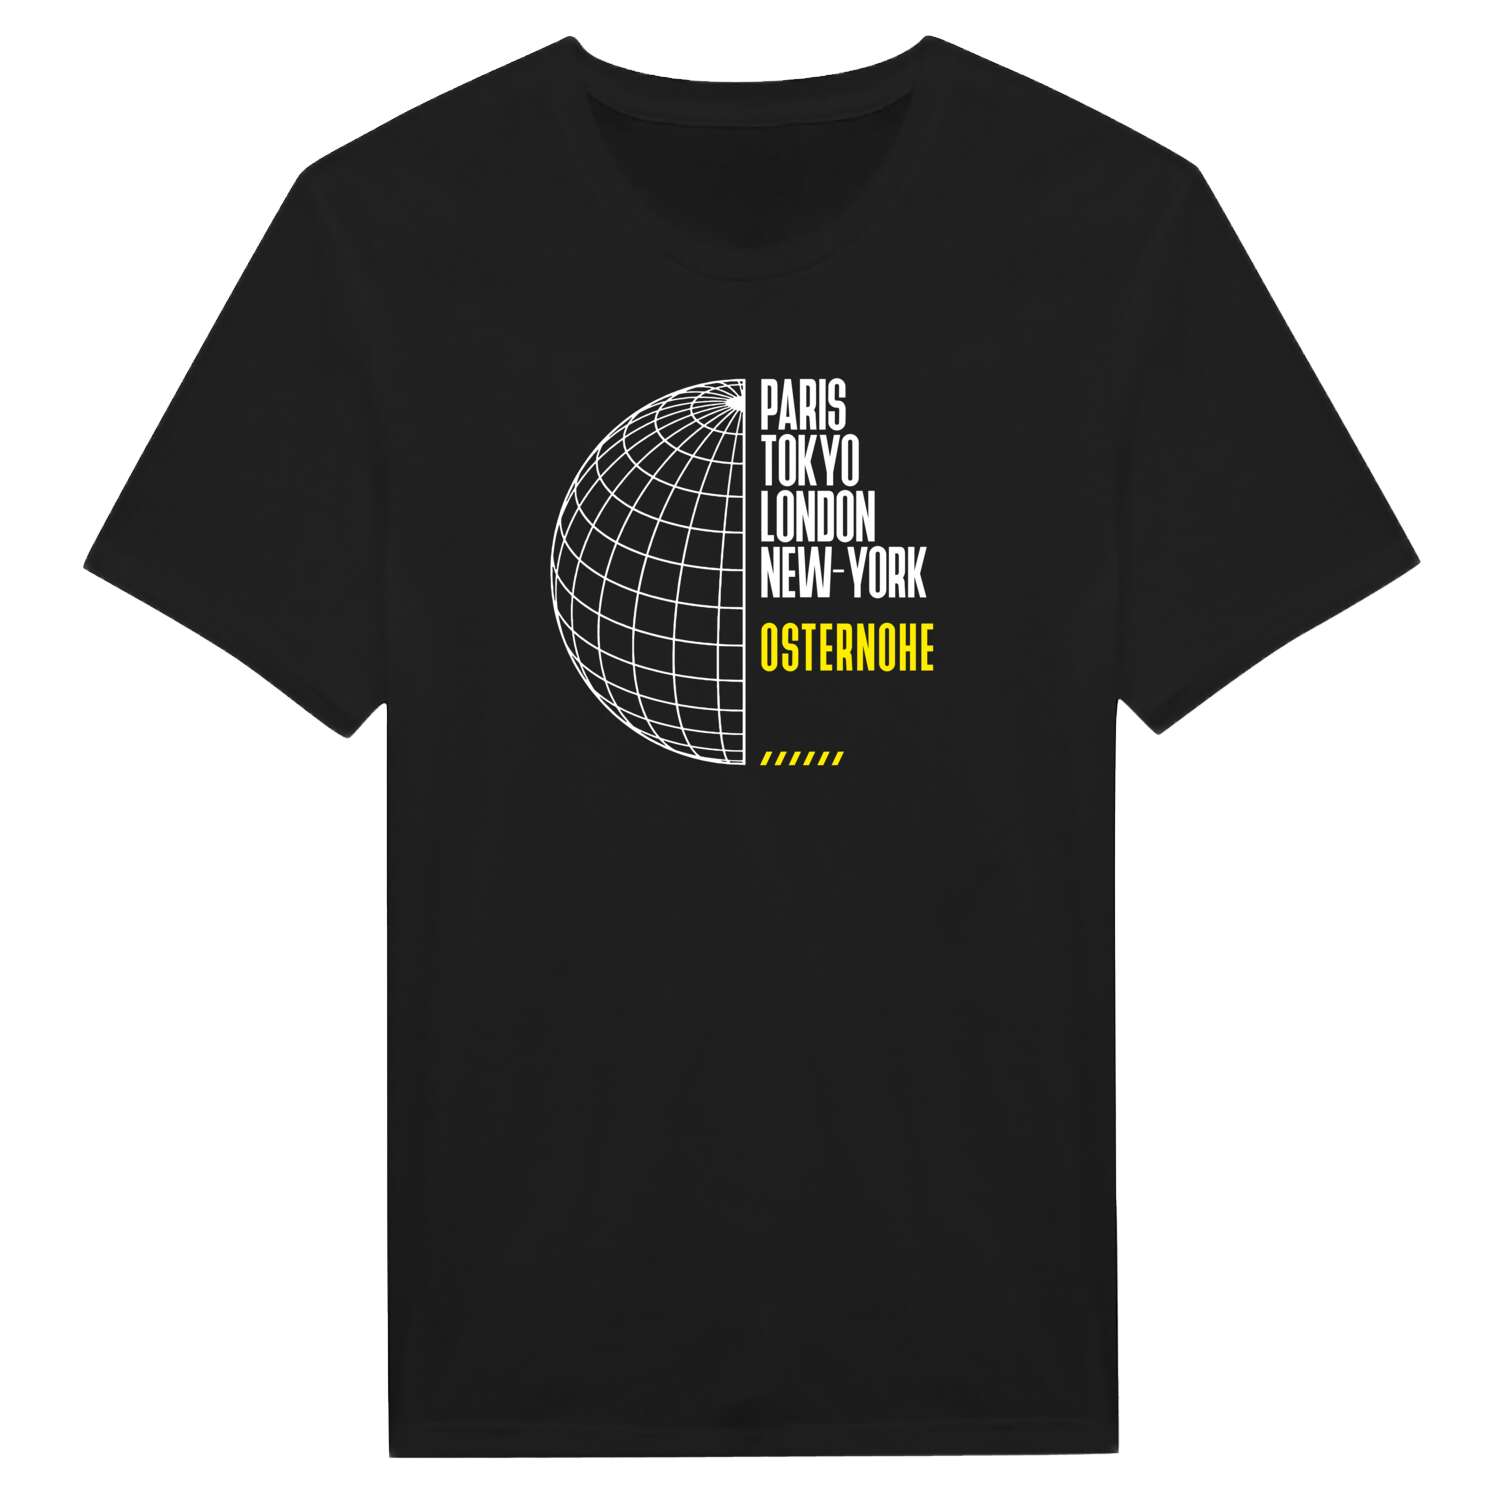 Osternohe T-Shirt »Paris Tokyo London«